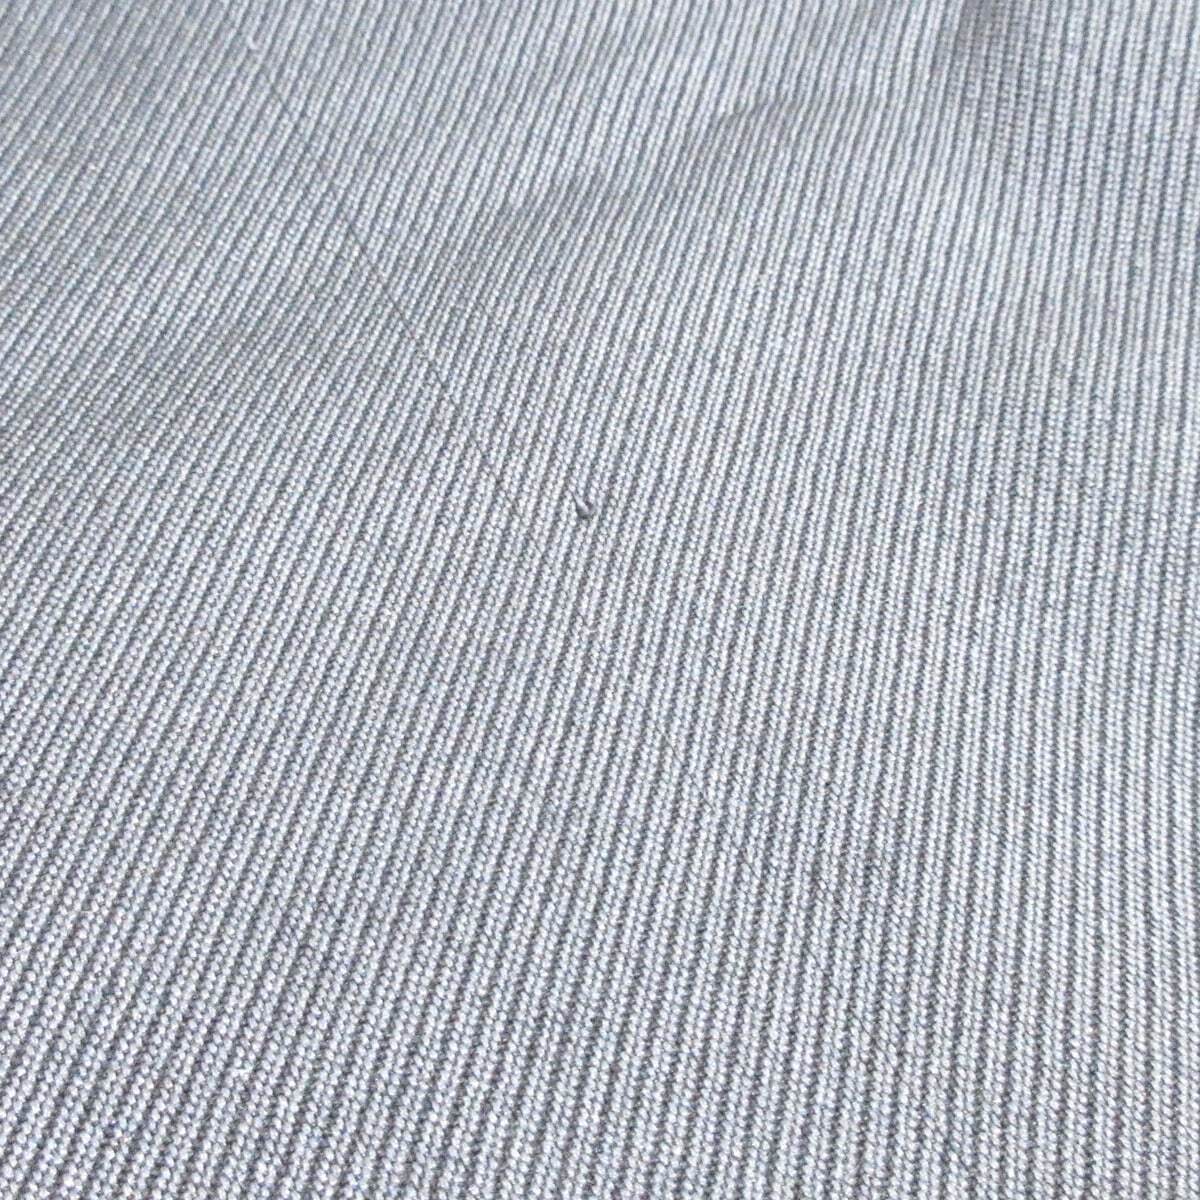 Auth CHANEL Navy Black Silk Wool Scarf - image 5